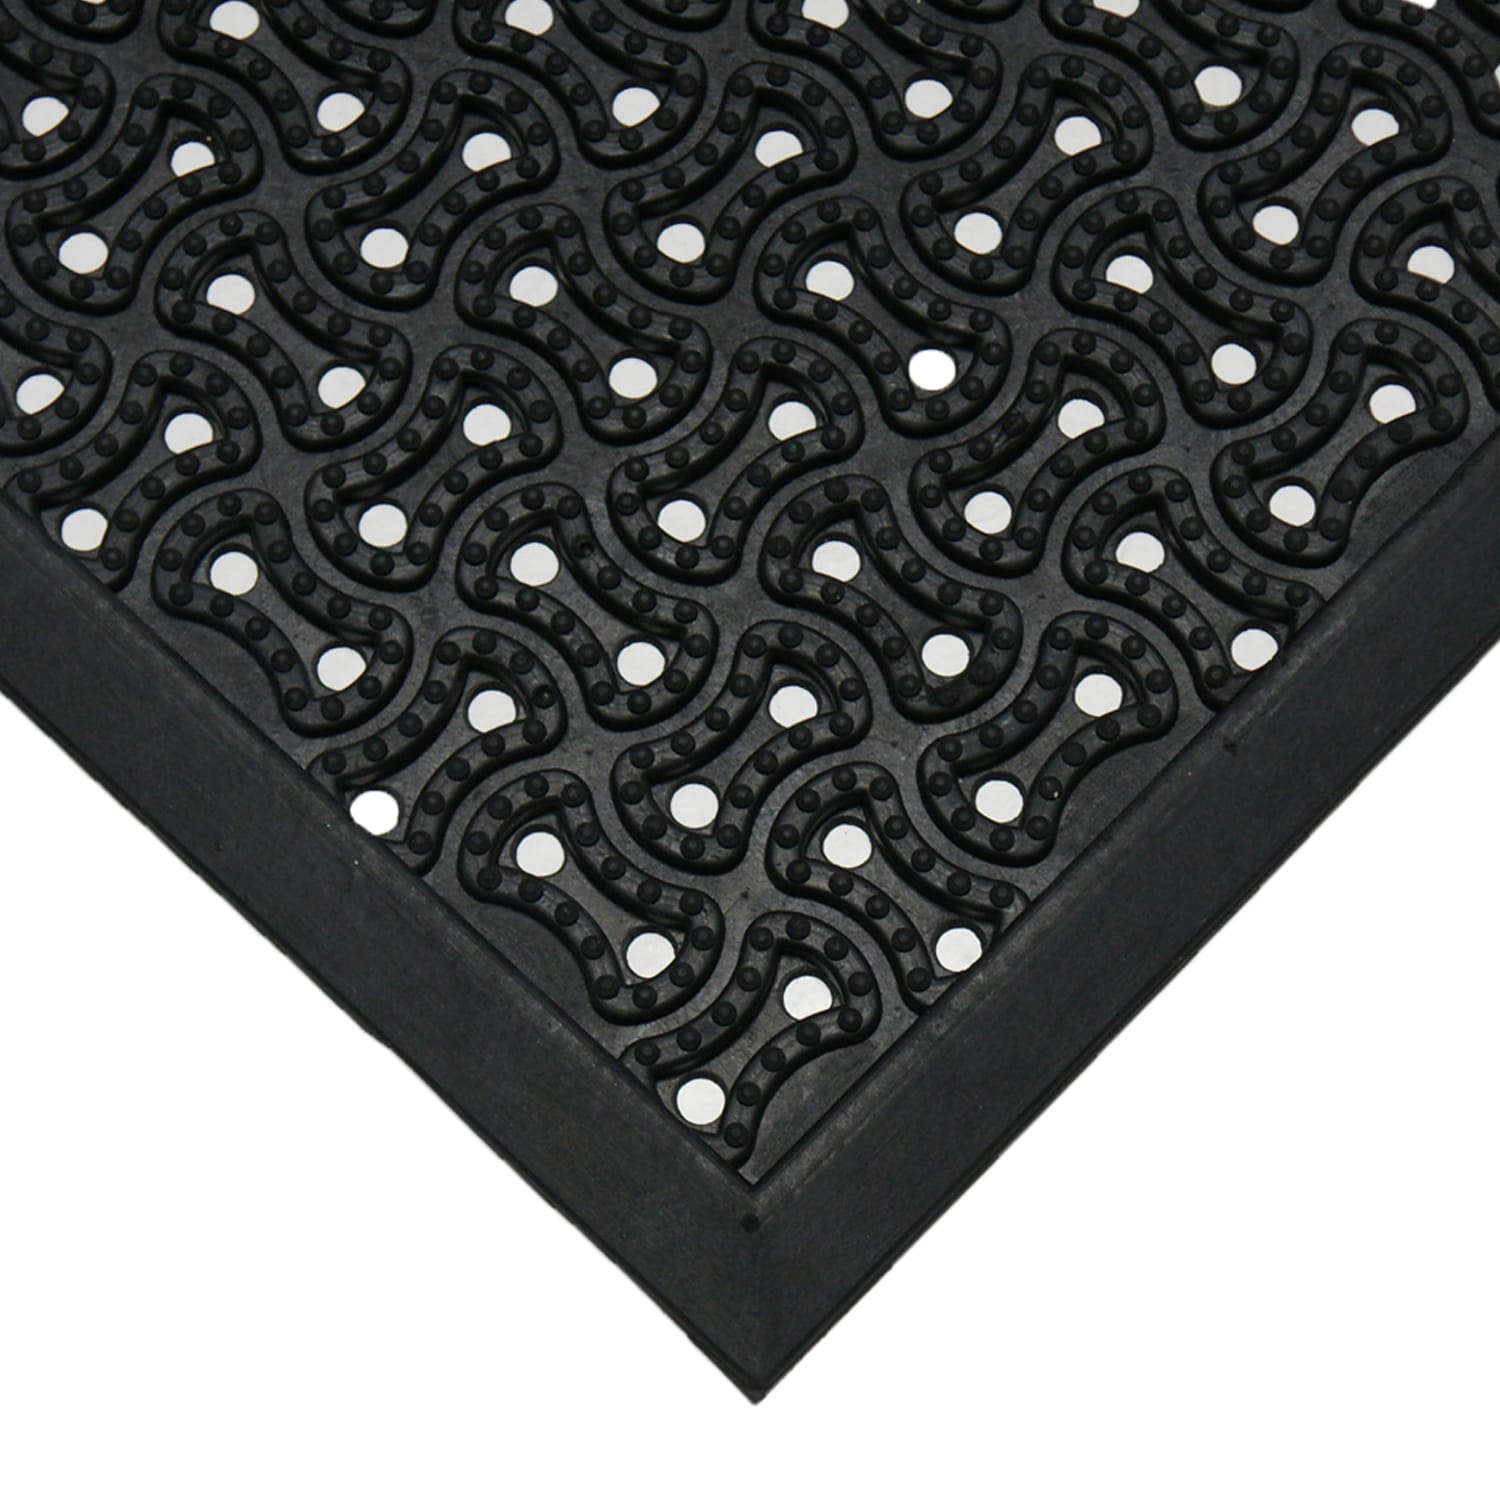 Rubber-Cal Dura-Scraper Drainage Commercial Rubber Door Mat - Black 36 x 24 x 0.38 in.